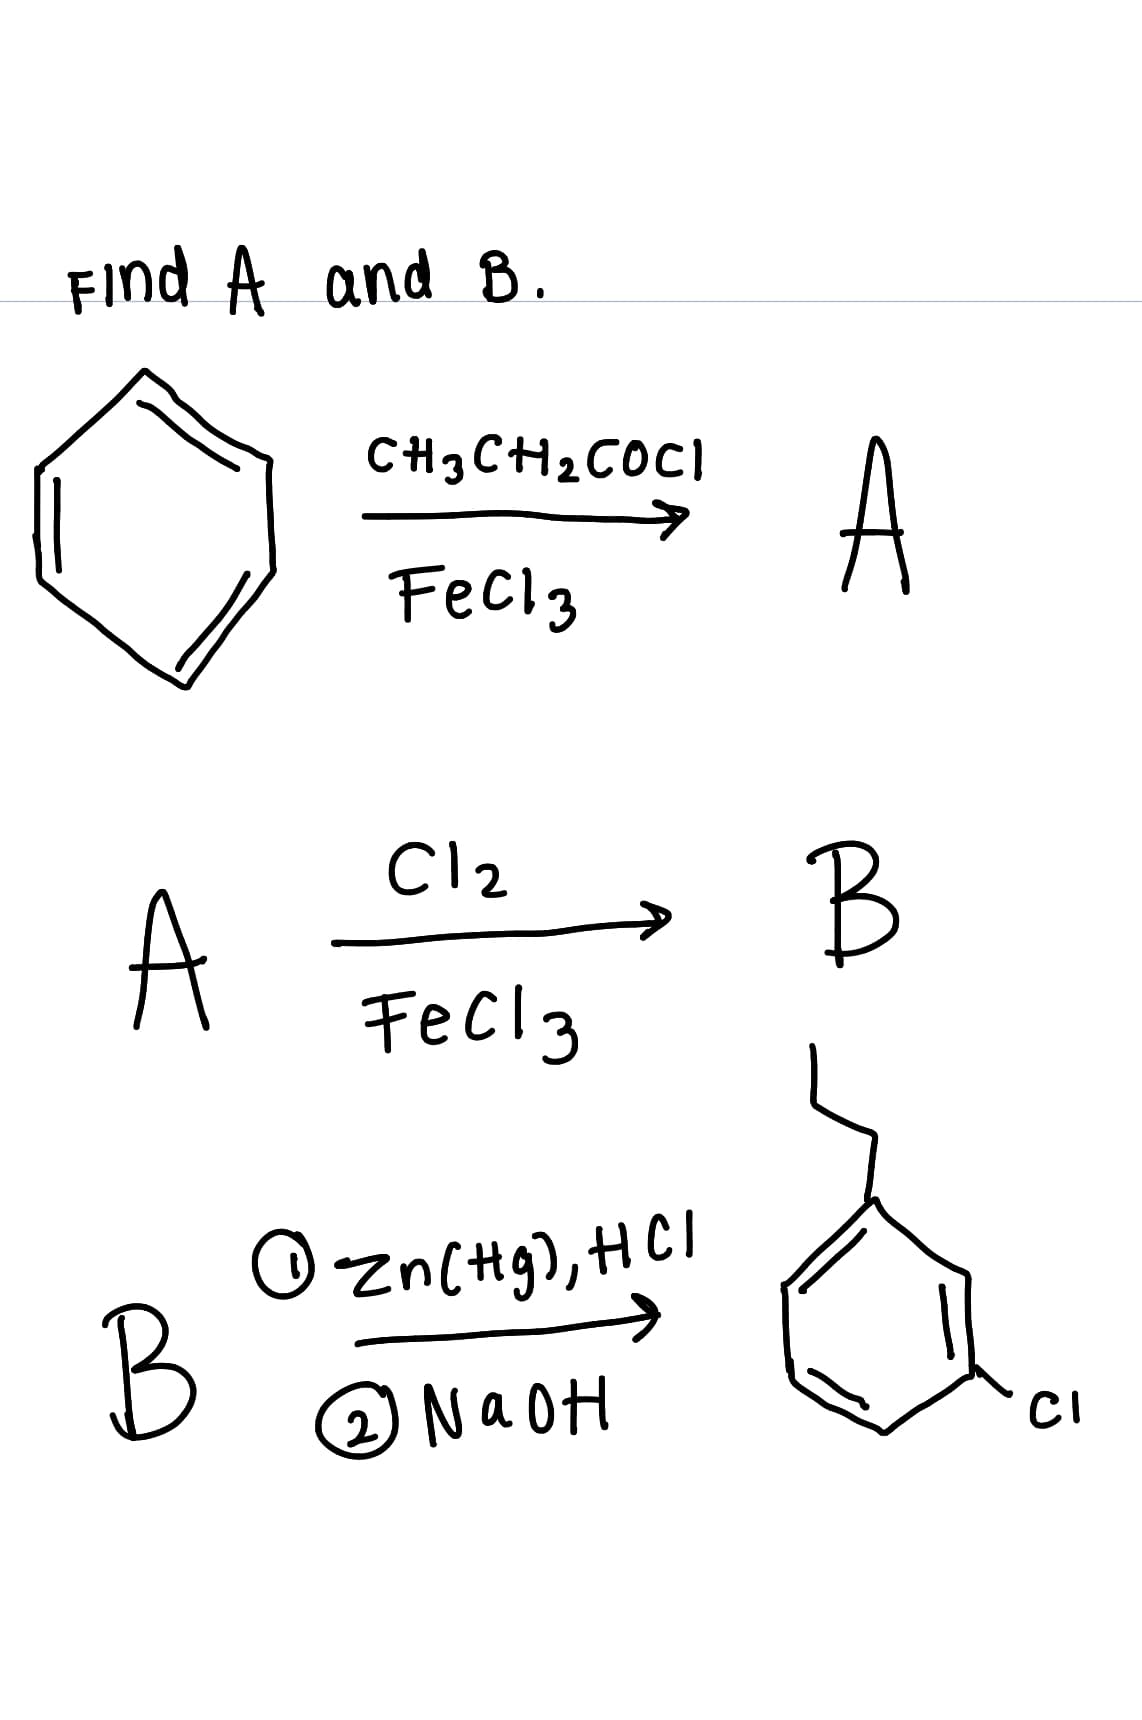 Find A and 8.
CH3CH2COCI
A
Fecl3
C12
A
Fecl3
O znCHg),HCI
a
CI
